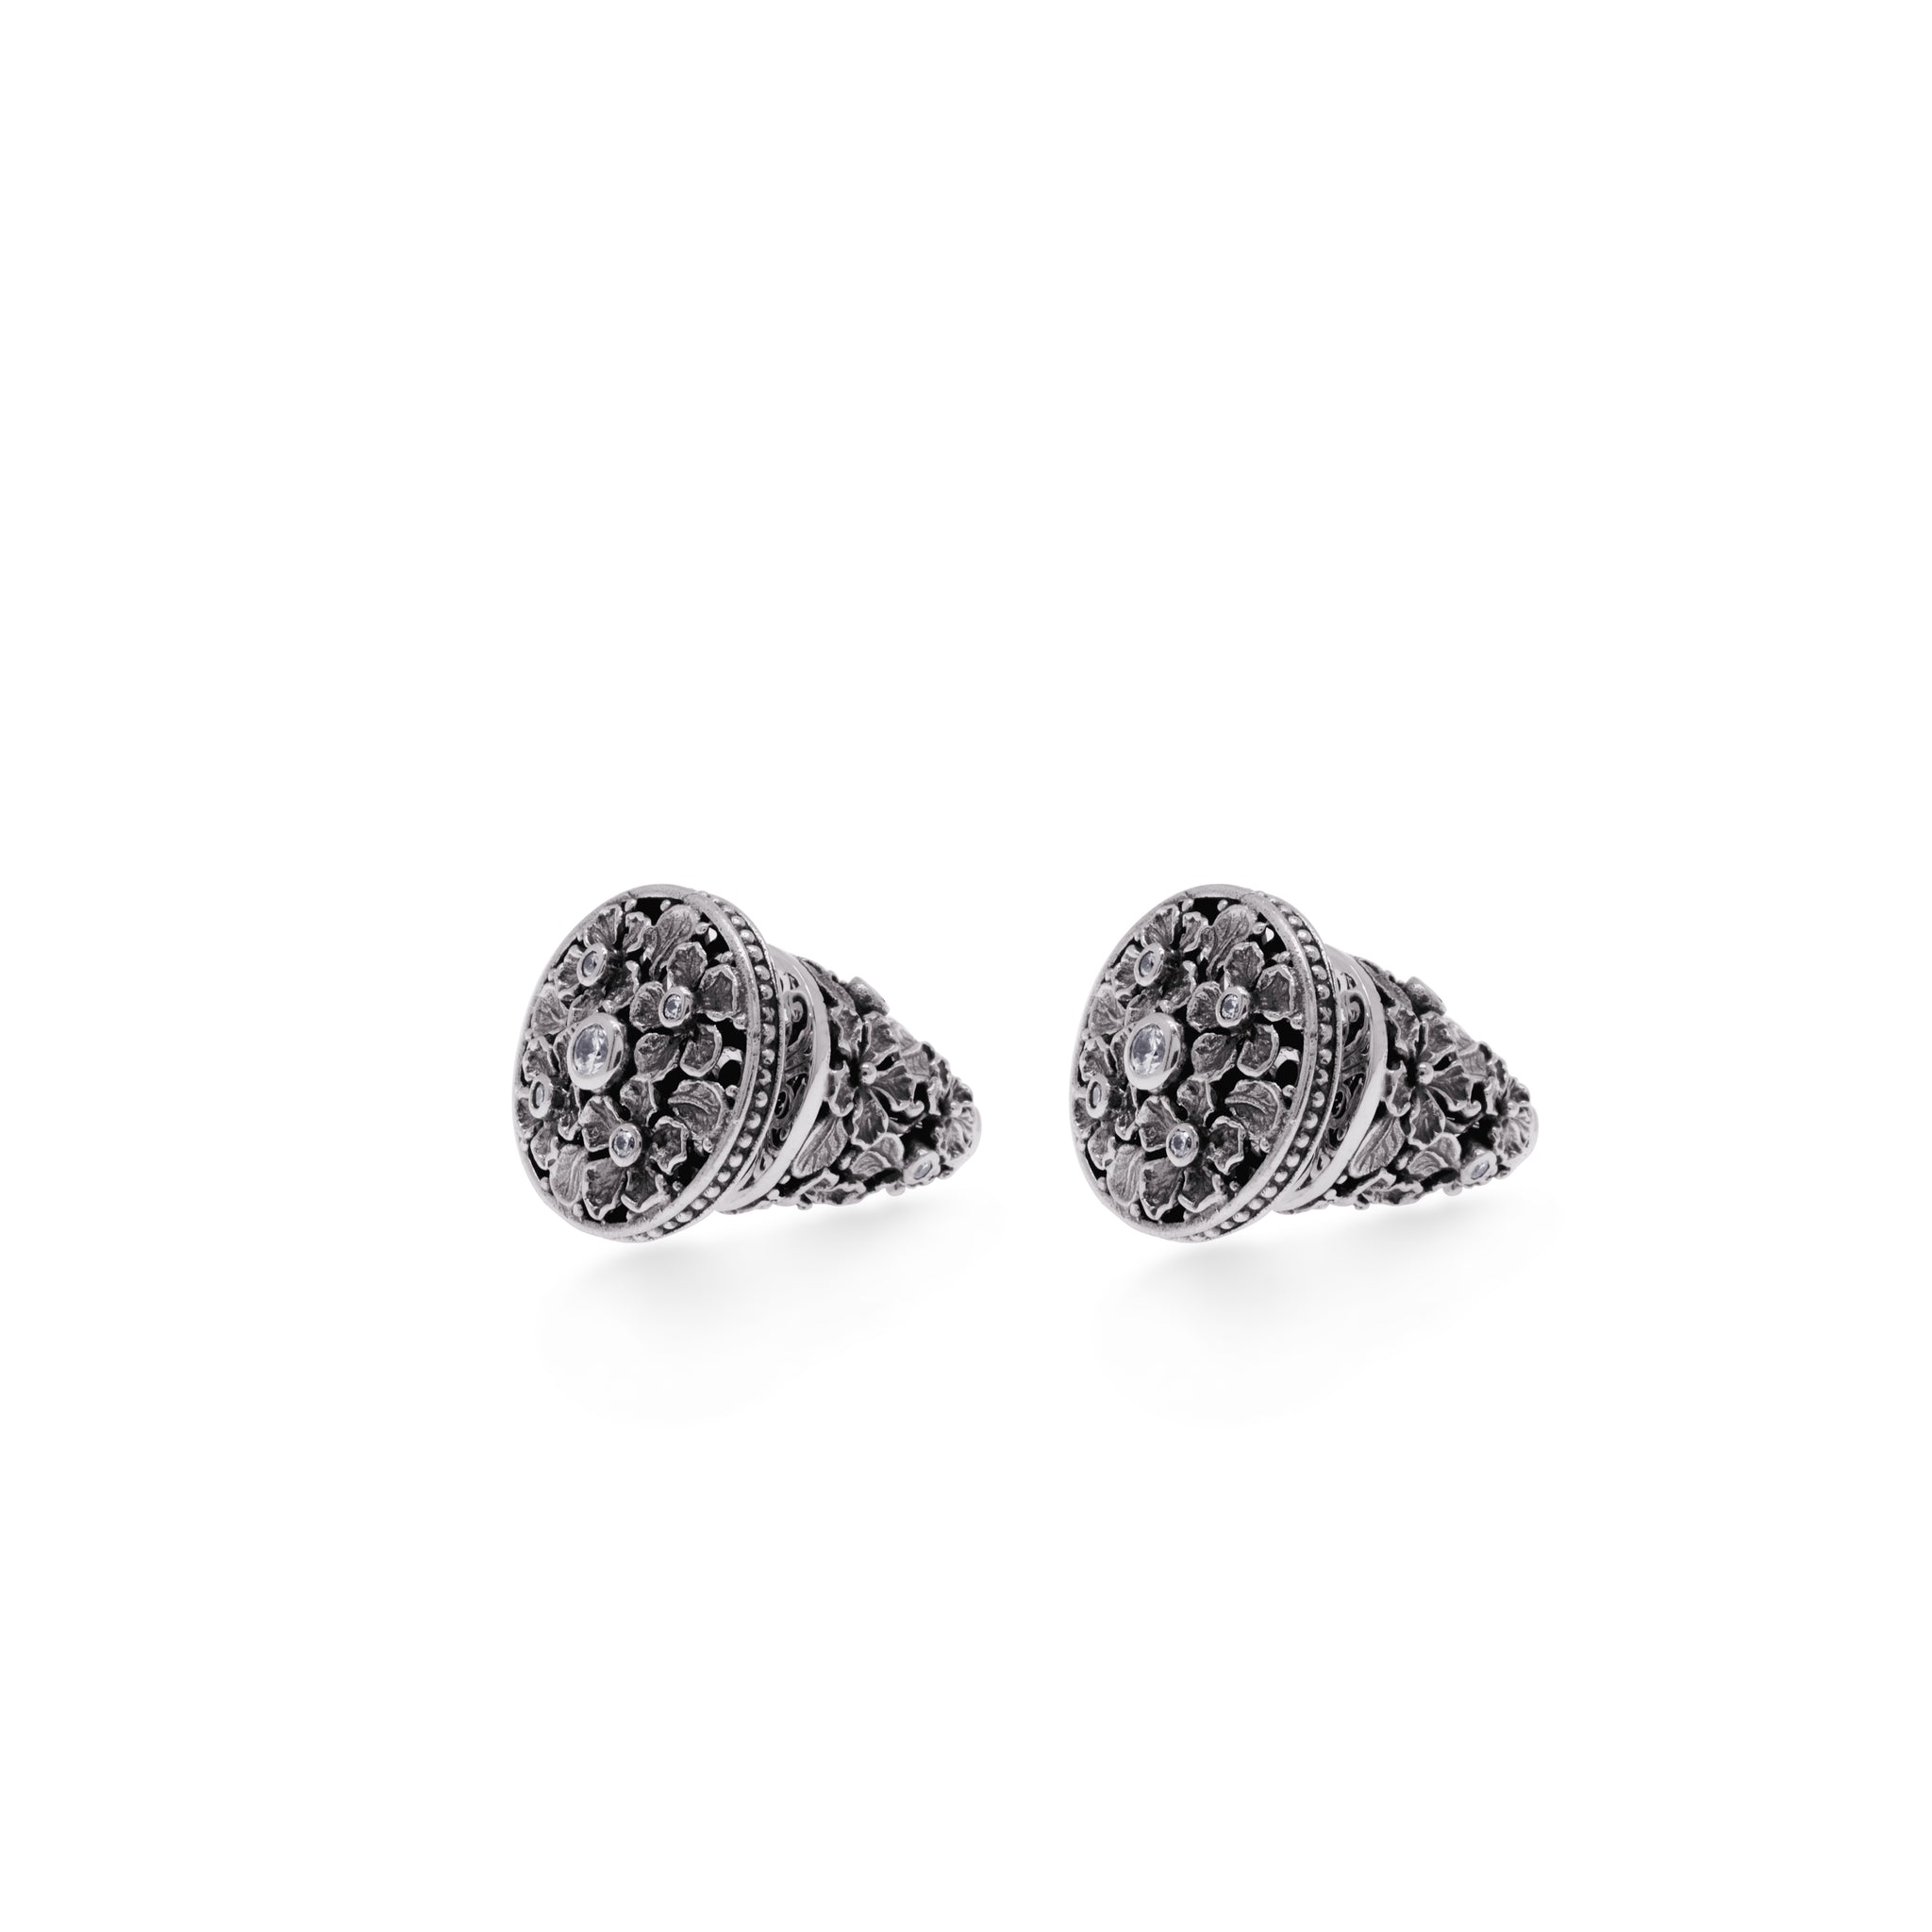 Anting Perak 925 Koleksi Flamboyan Subeng Stud Earrings